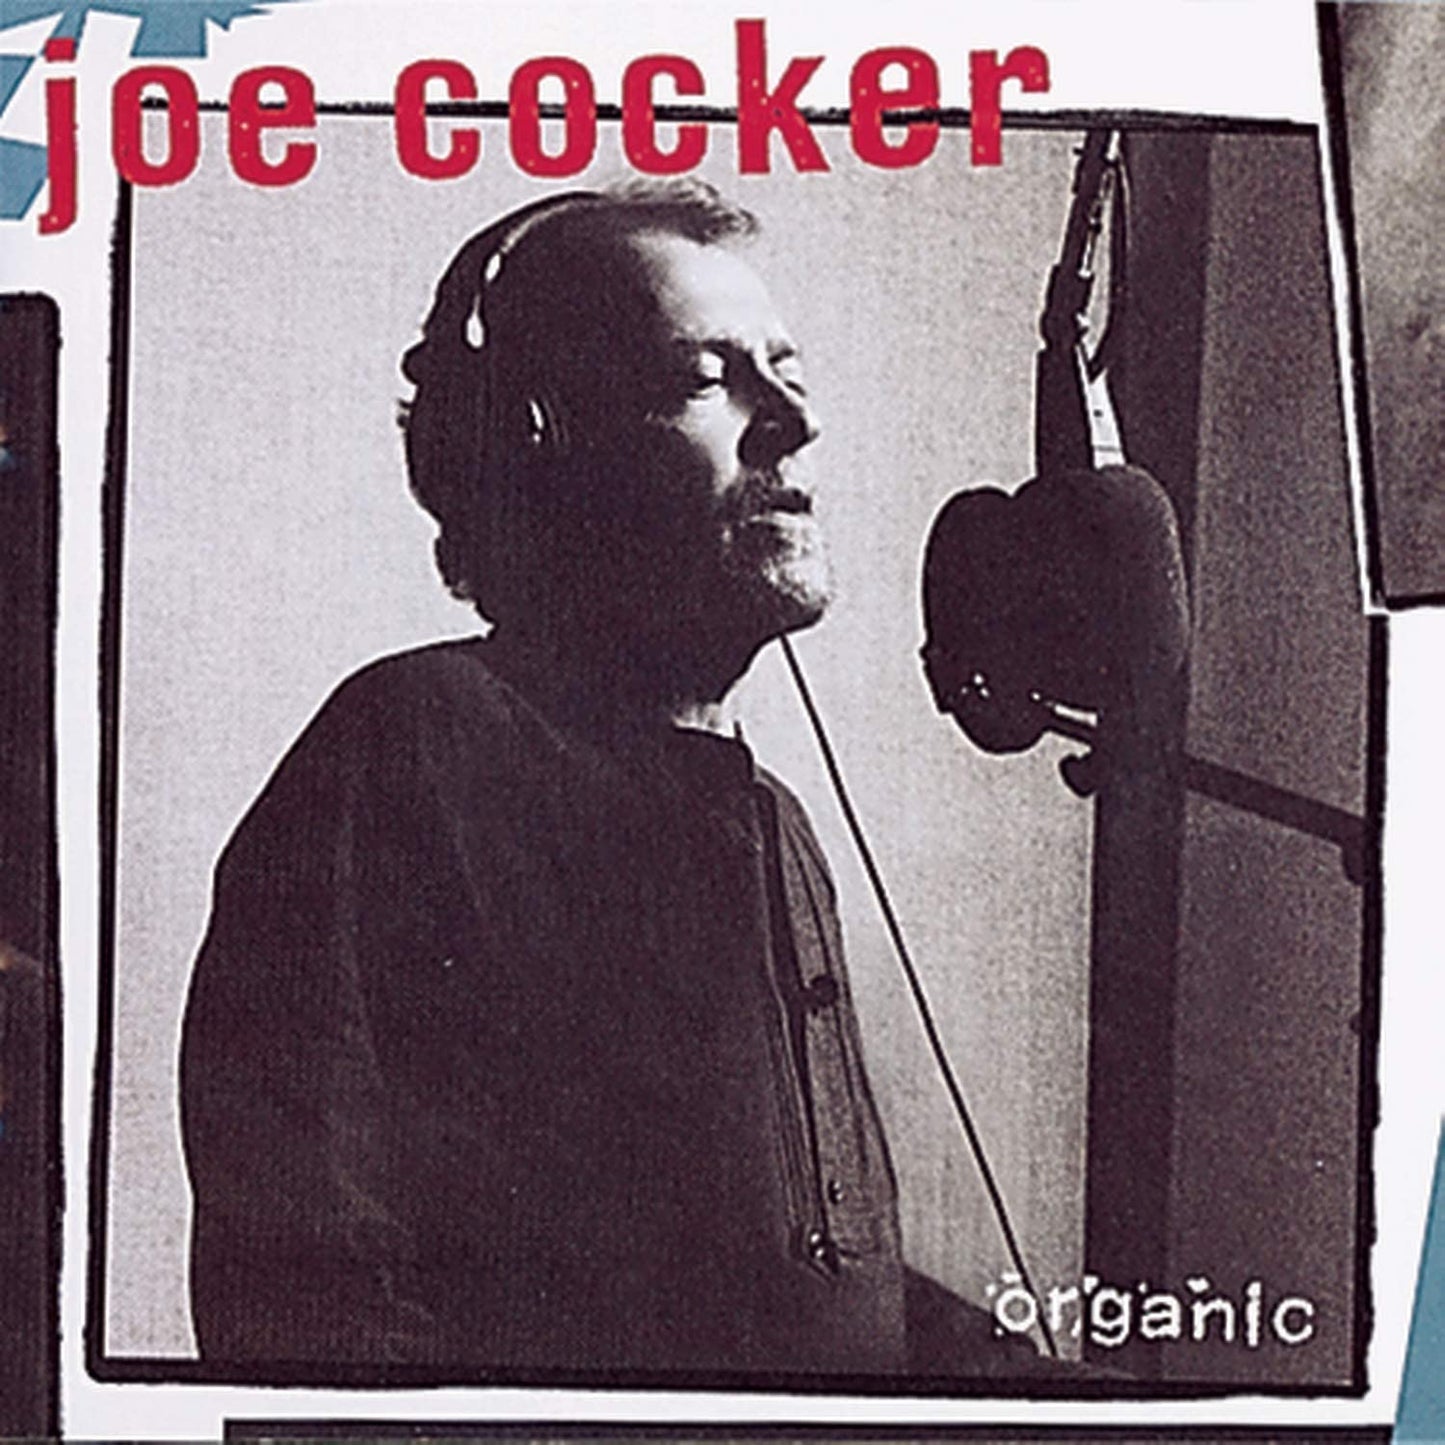 Joe Cocker – Organic - USED CD